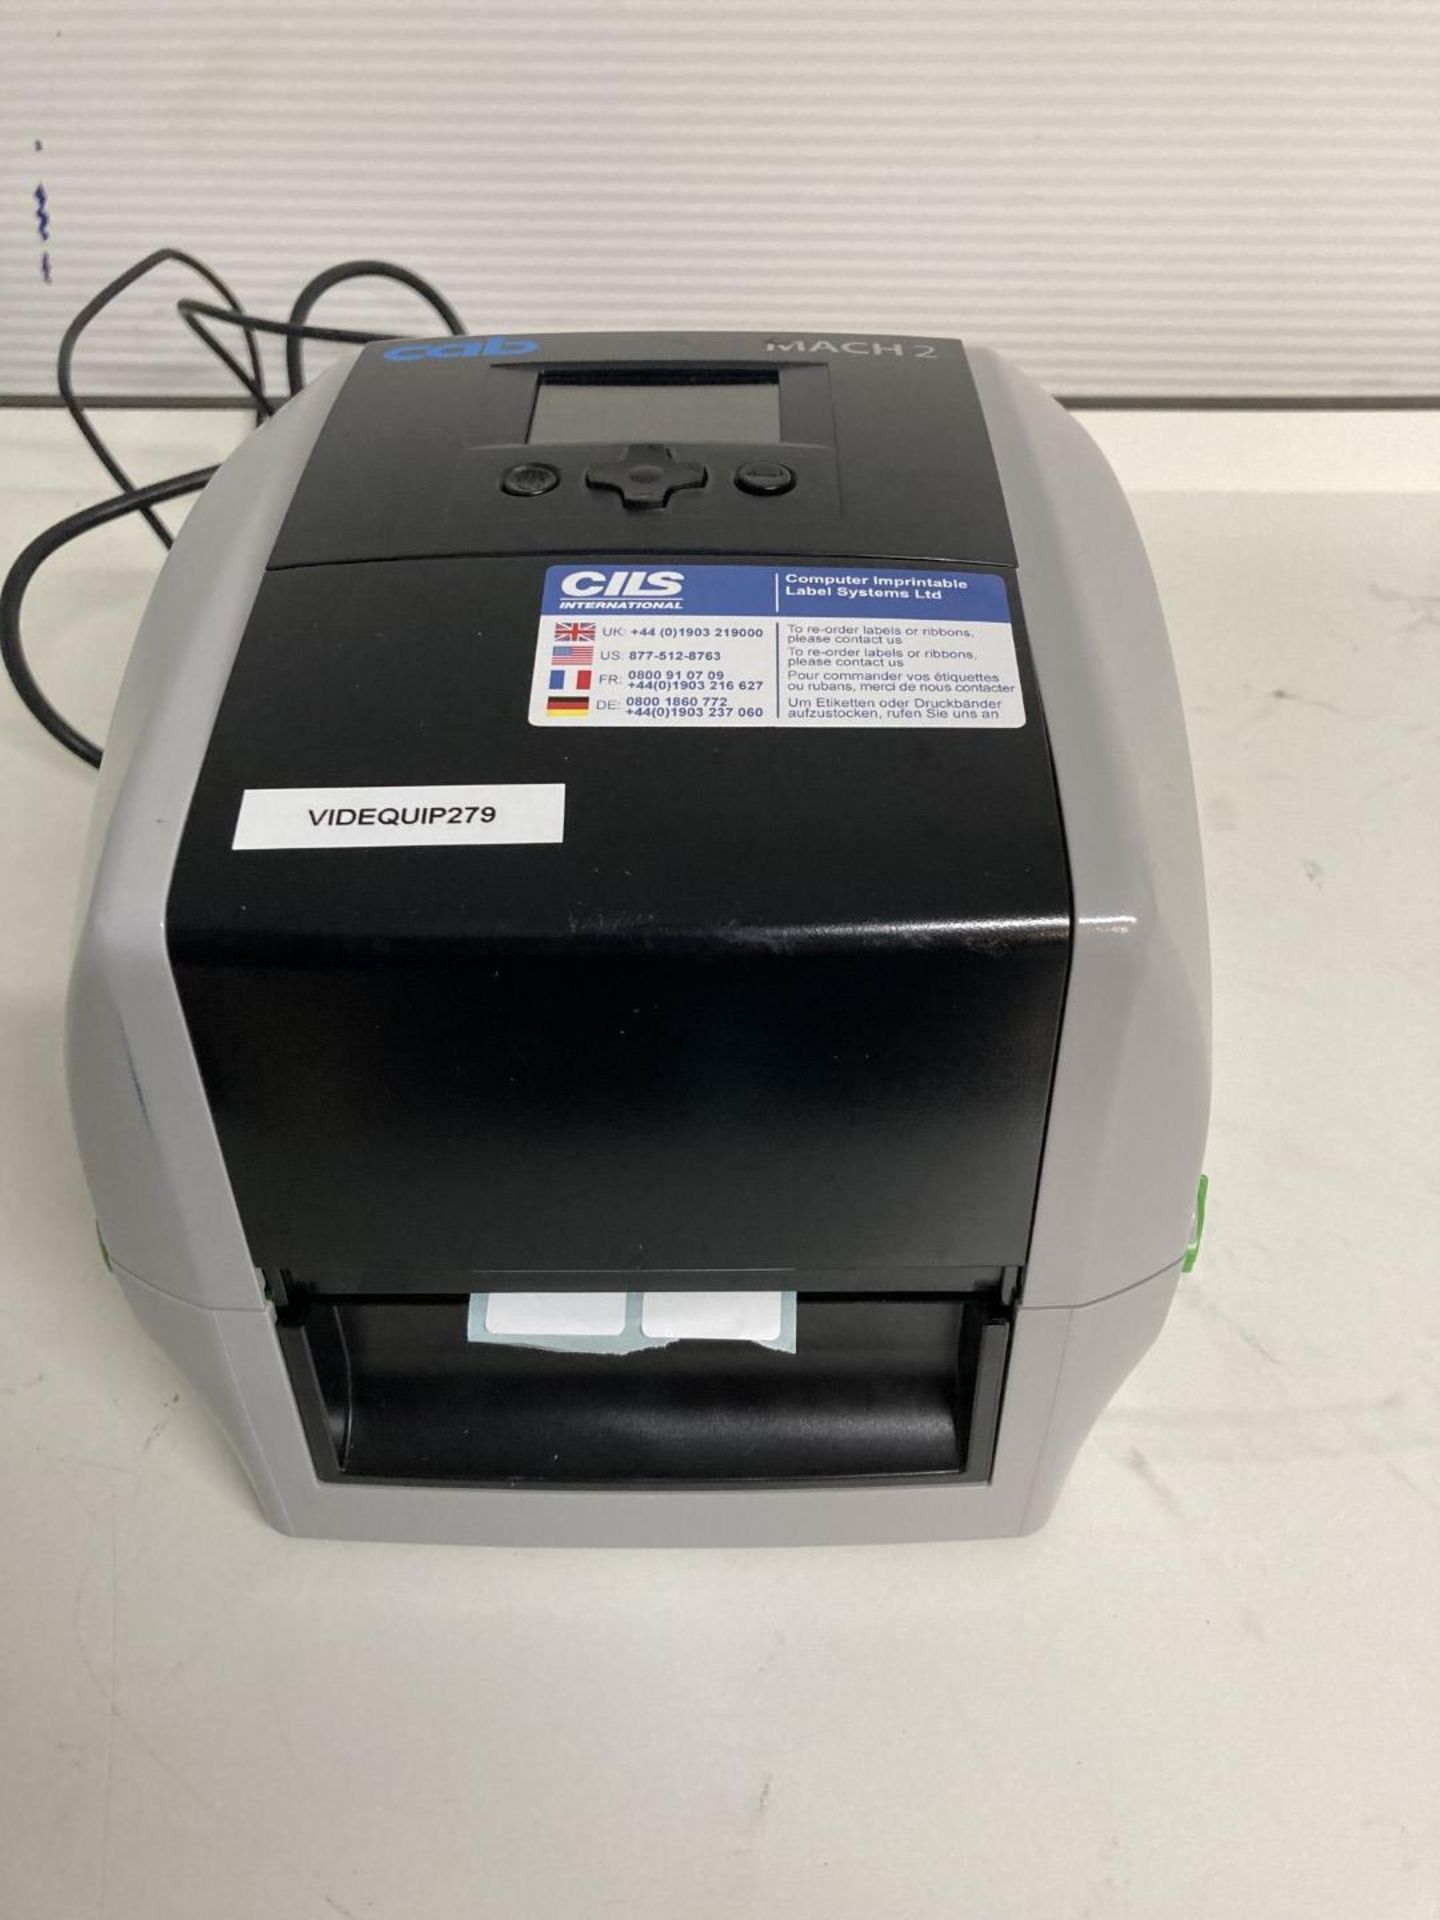 Cab MACH2/300 Label Printer - Image 2 of 3